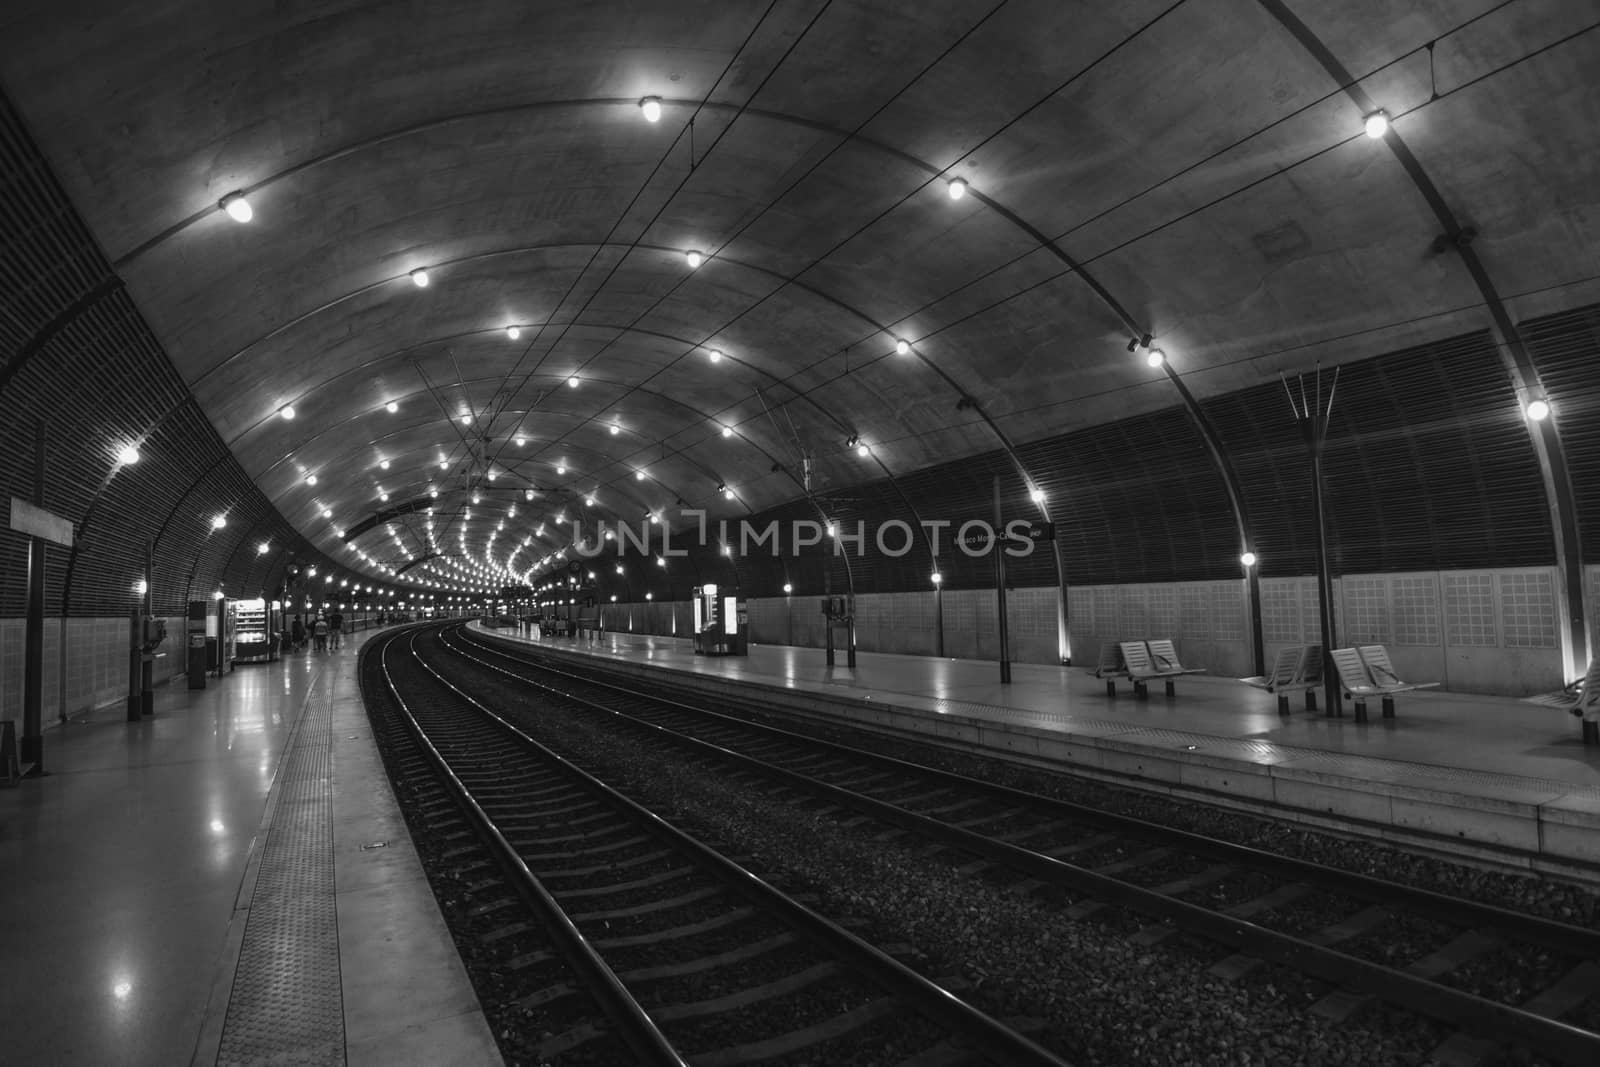 An underground train station in France